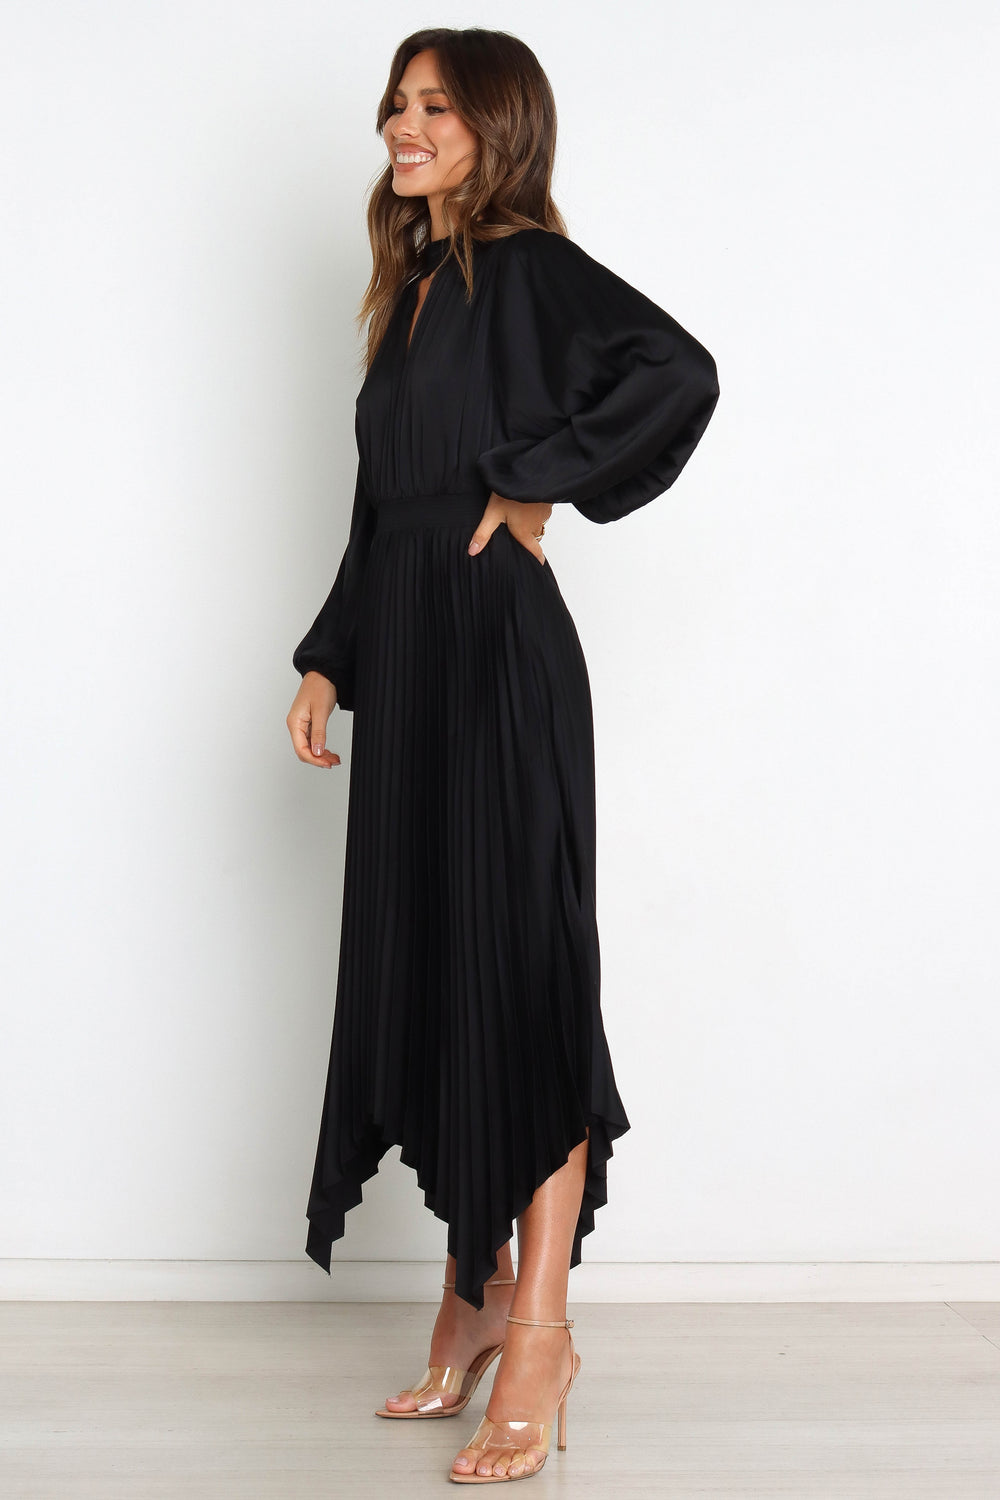 Shop Formal Dress - Eloise Dress - Black secondary image